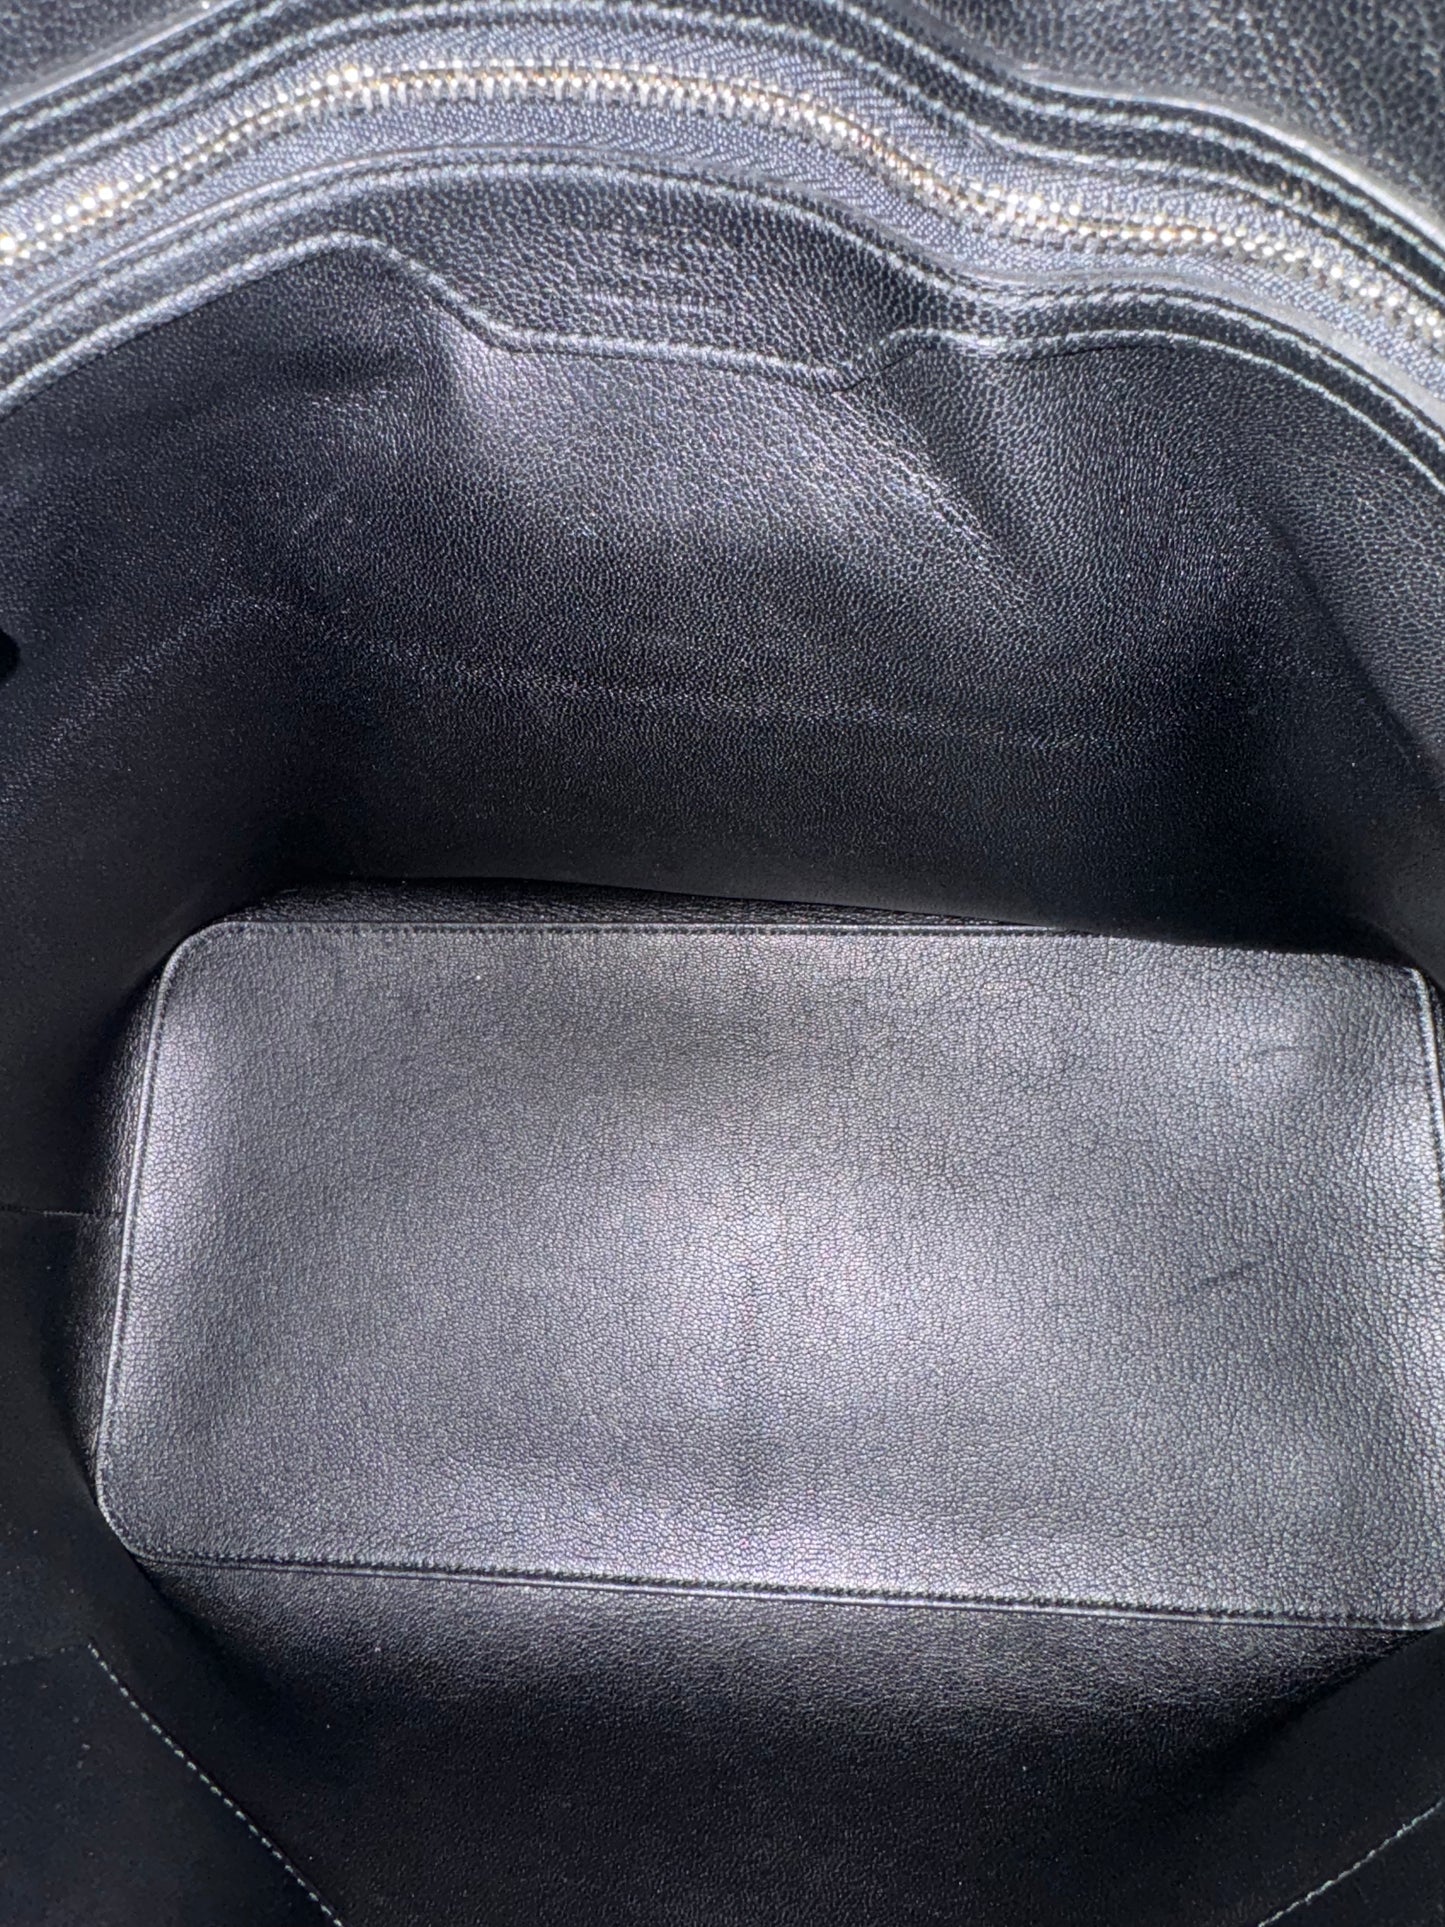 Louis Vuitton Black Smooth Calf Leather Custom Order Lockit Tote (Haute Maroquinerie) (2)